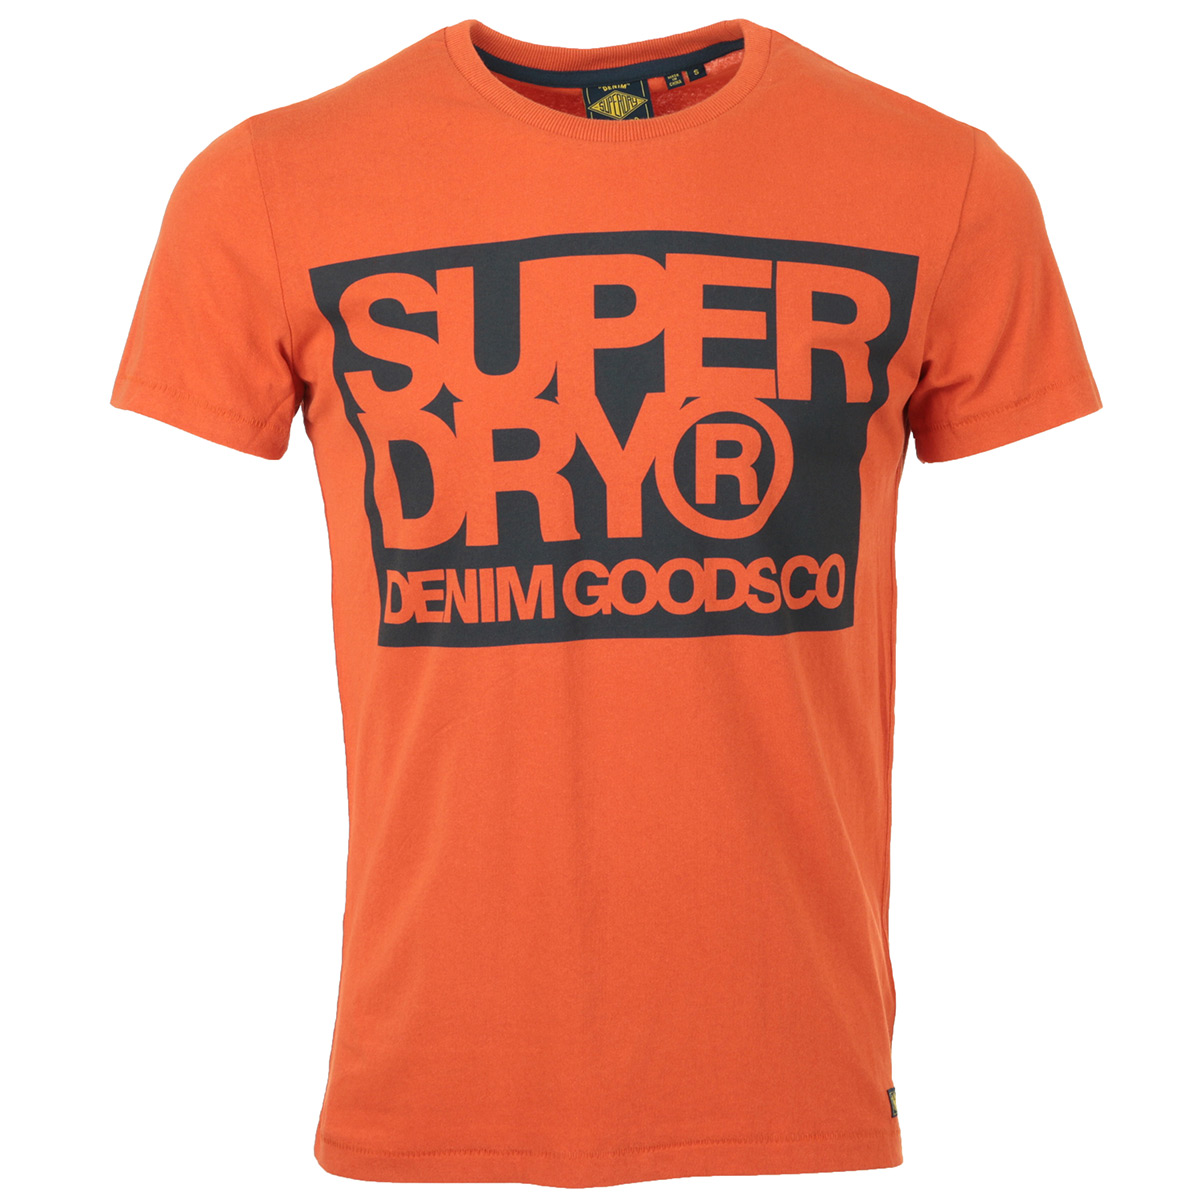 Superdry Denim Goods Co Print Tee